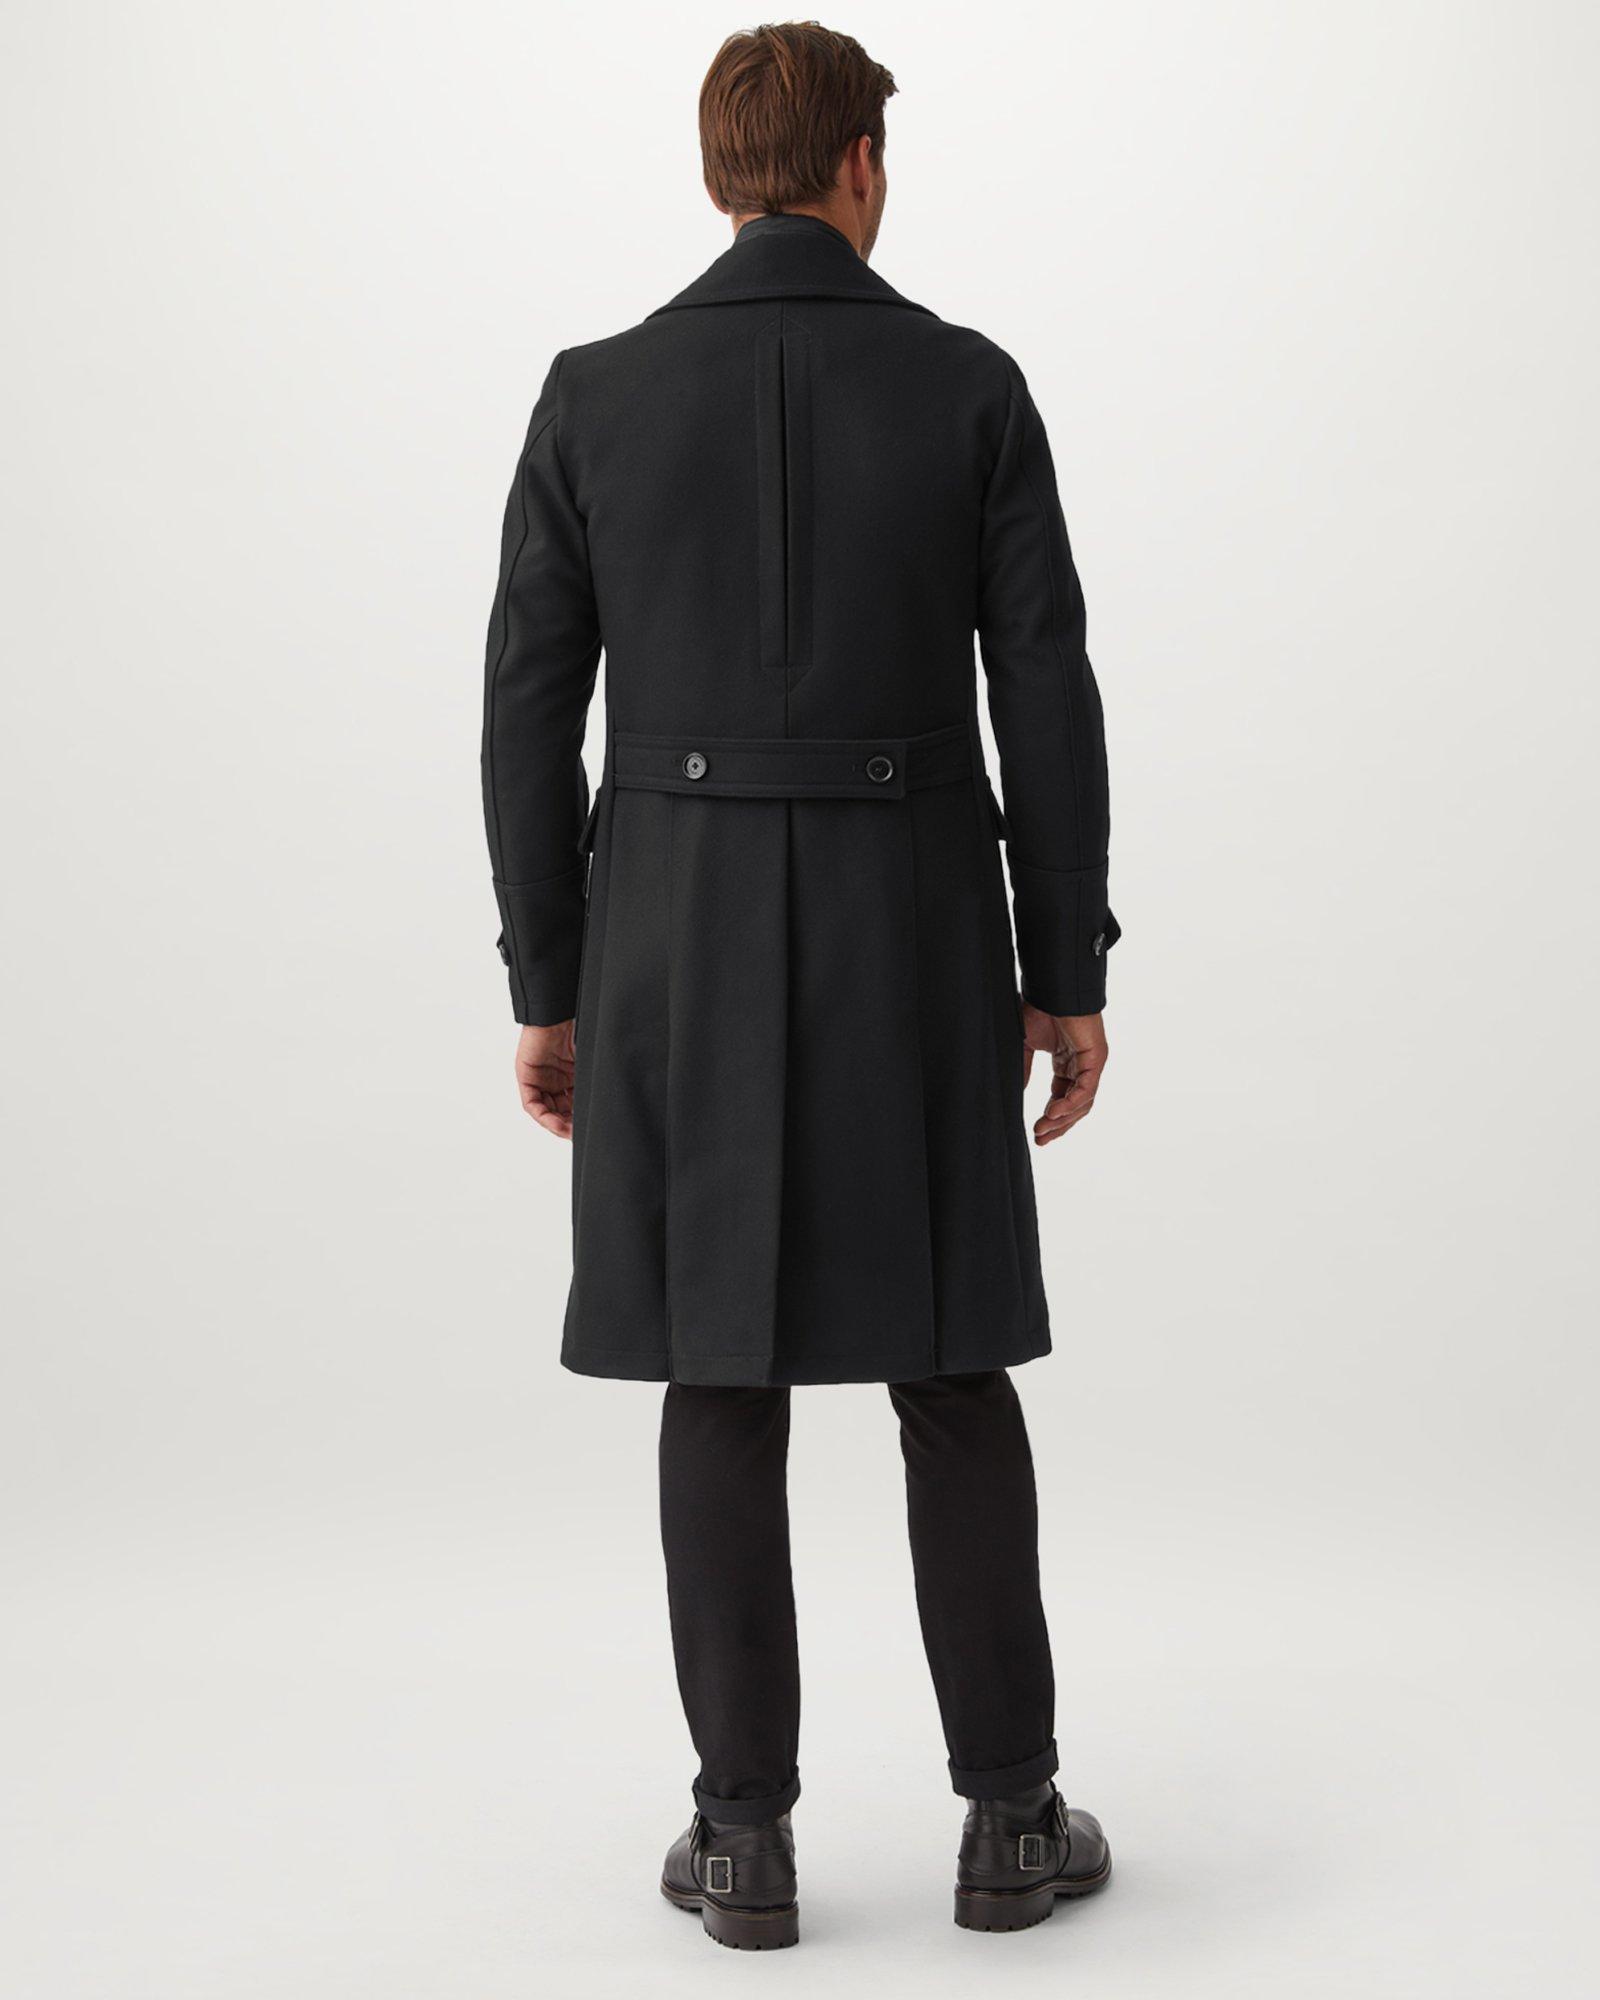 Belstaff Wool Milford Coat in Black for Men - Lyst